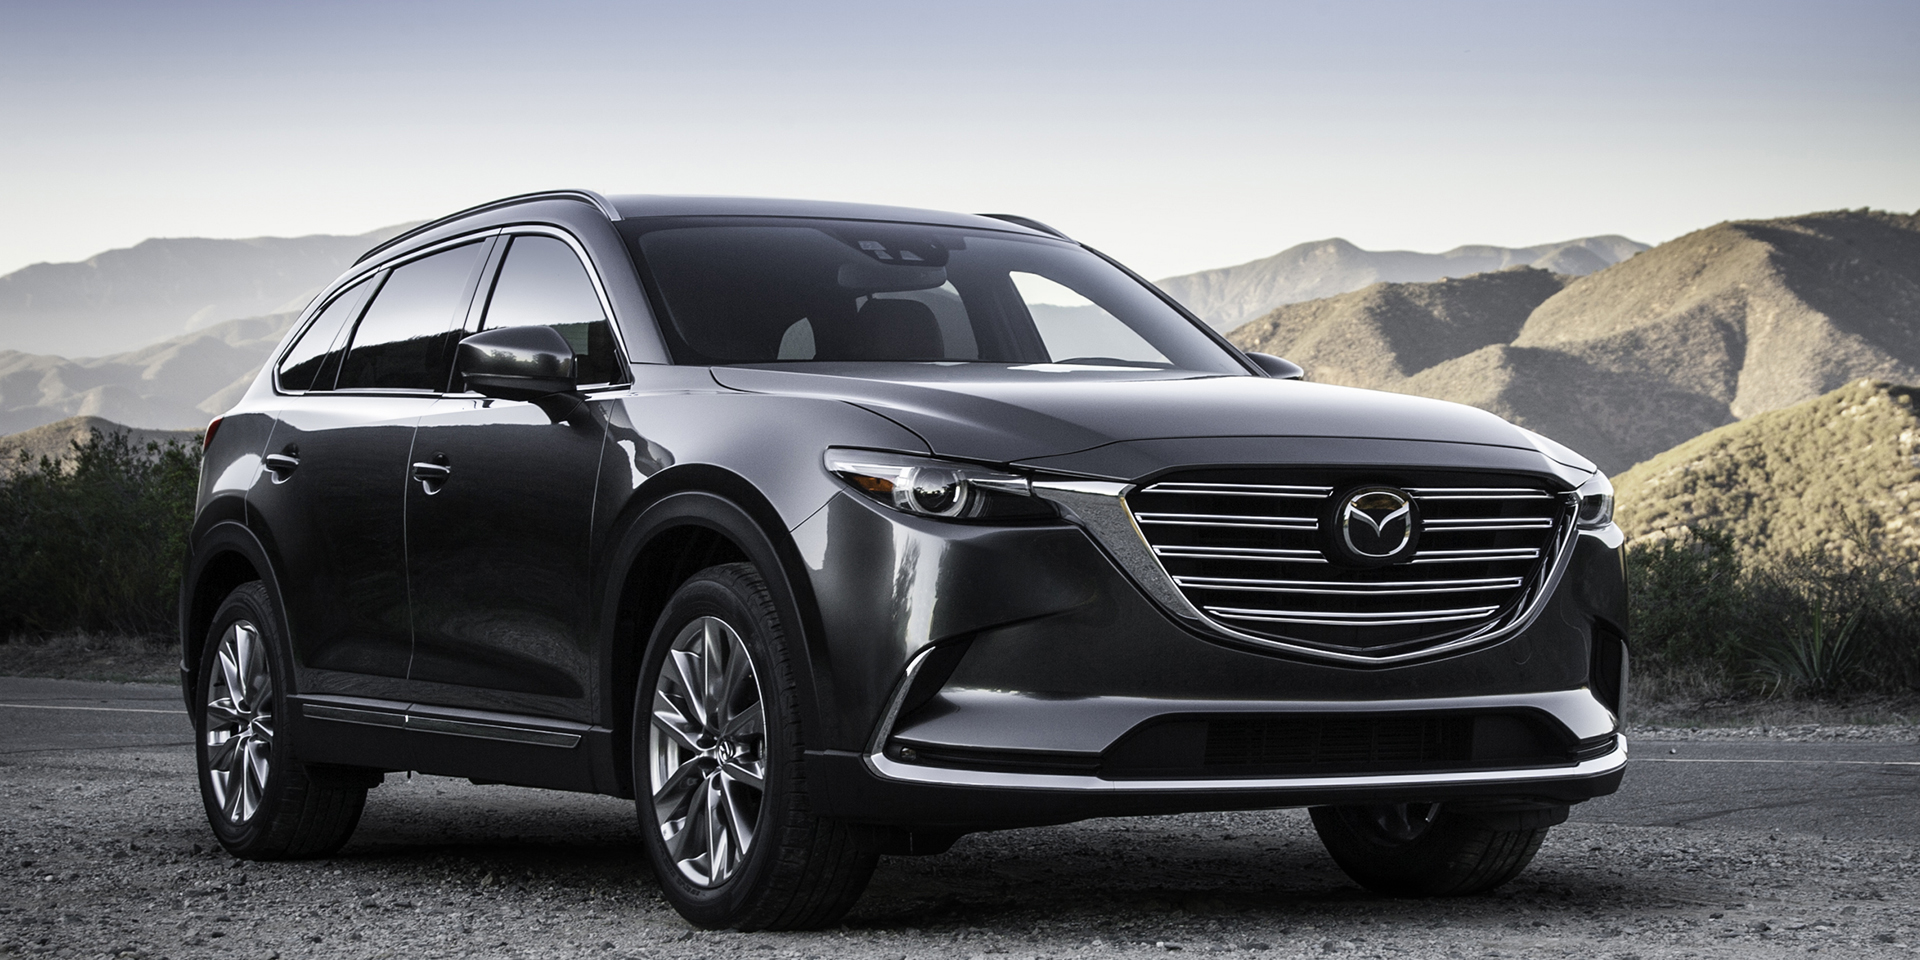 2016 - Mazda - CX-9 - Vehicles on Display | Chicago Auto ...